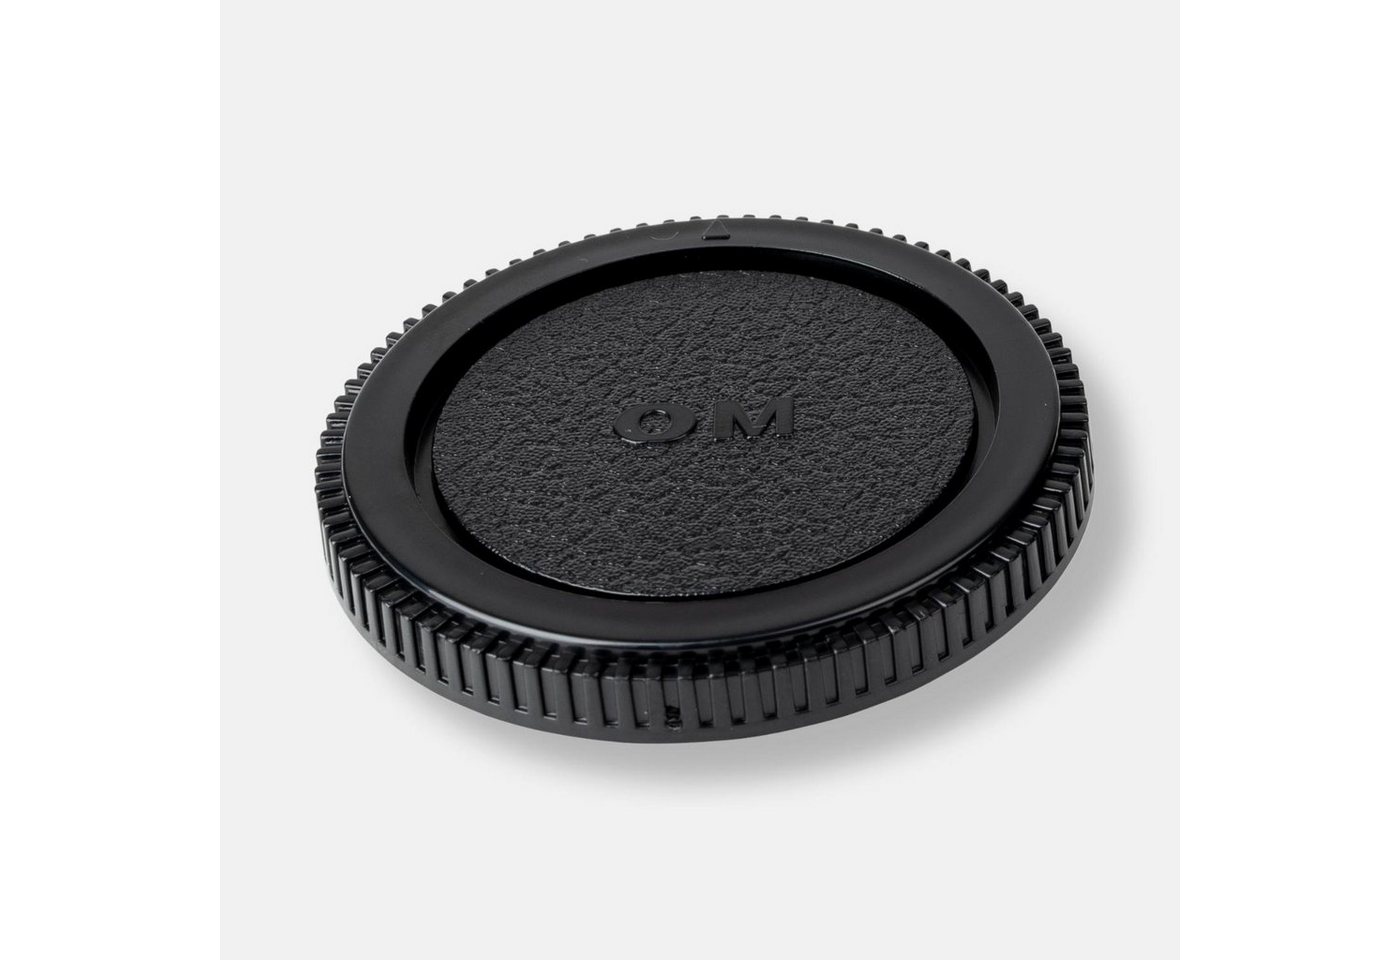 Lens-Aid Gehäusedeckel für Olympus OM-Bajonett, Body Cap, DSLR, Systemkamera von Lens-Aid